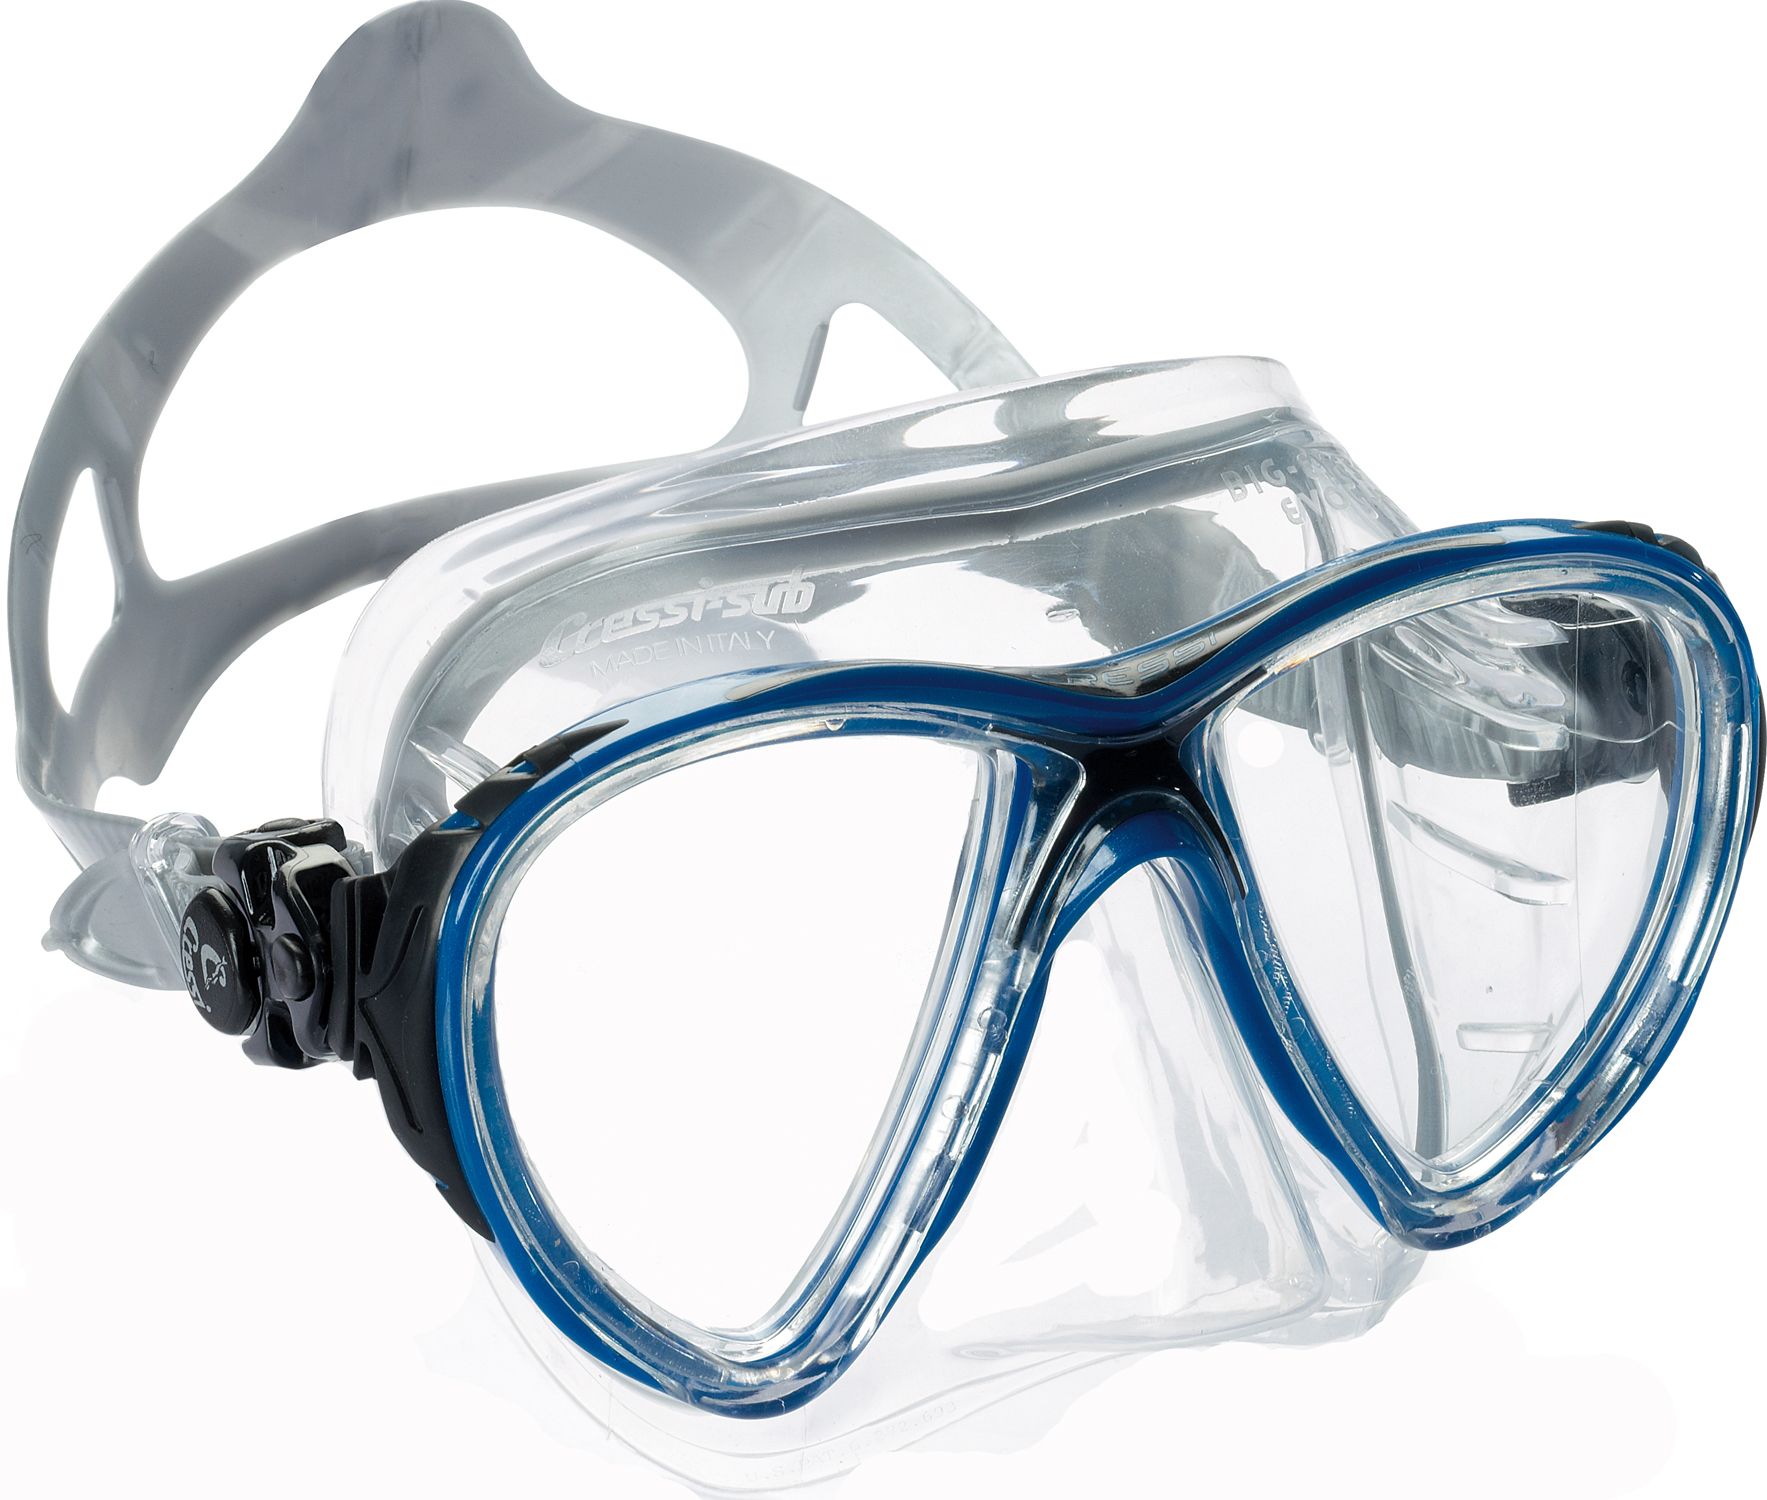 Photos - Swimming Mask Cressi Sub Cressi Big Eyes Evolution Crystal Snorkeling & Scuba Mask, Black/Blue 16CR 